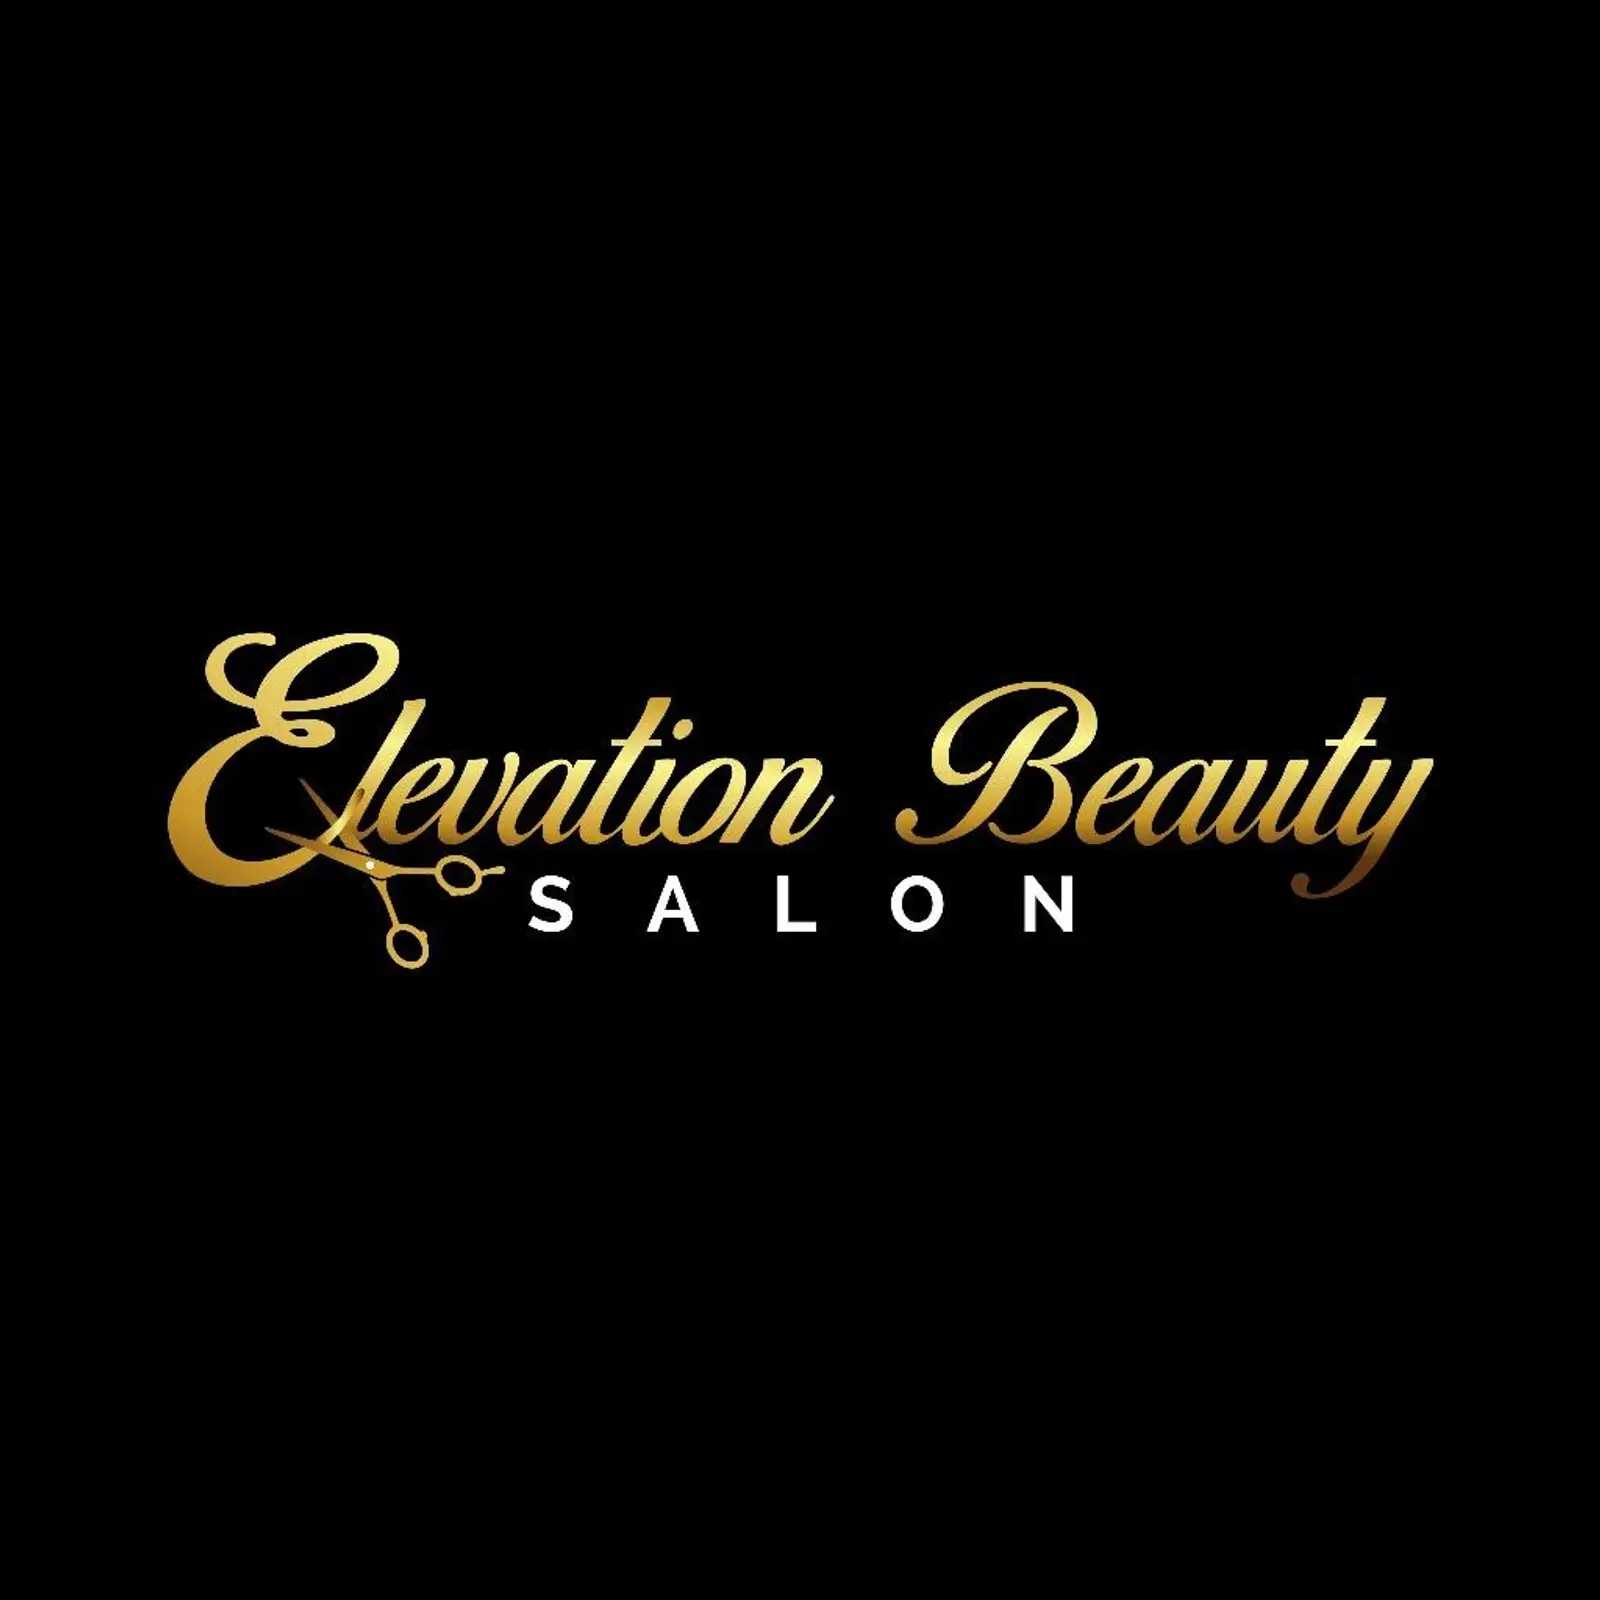 Elevation Beauty logo